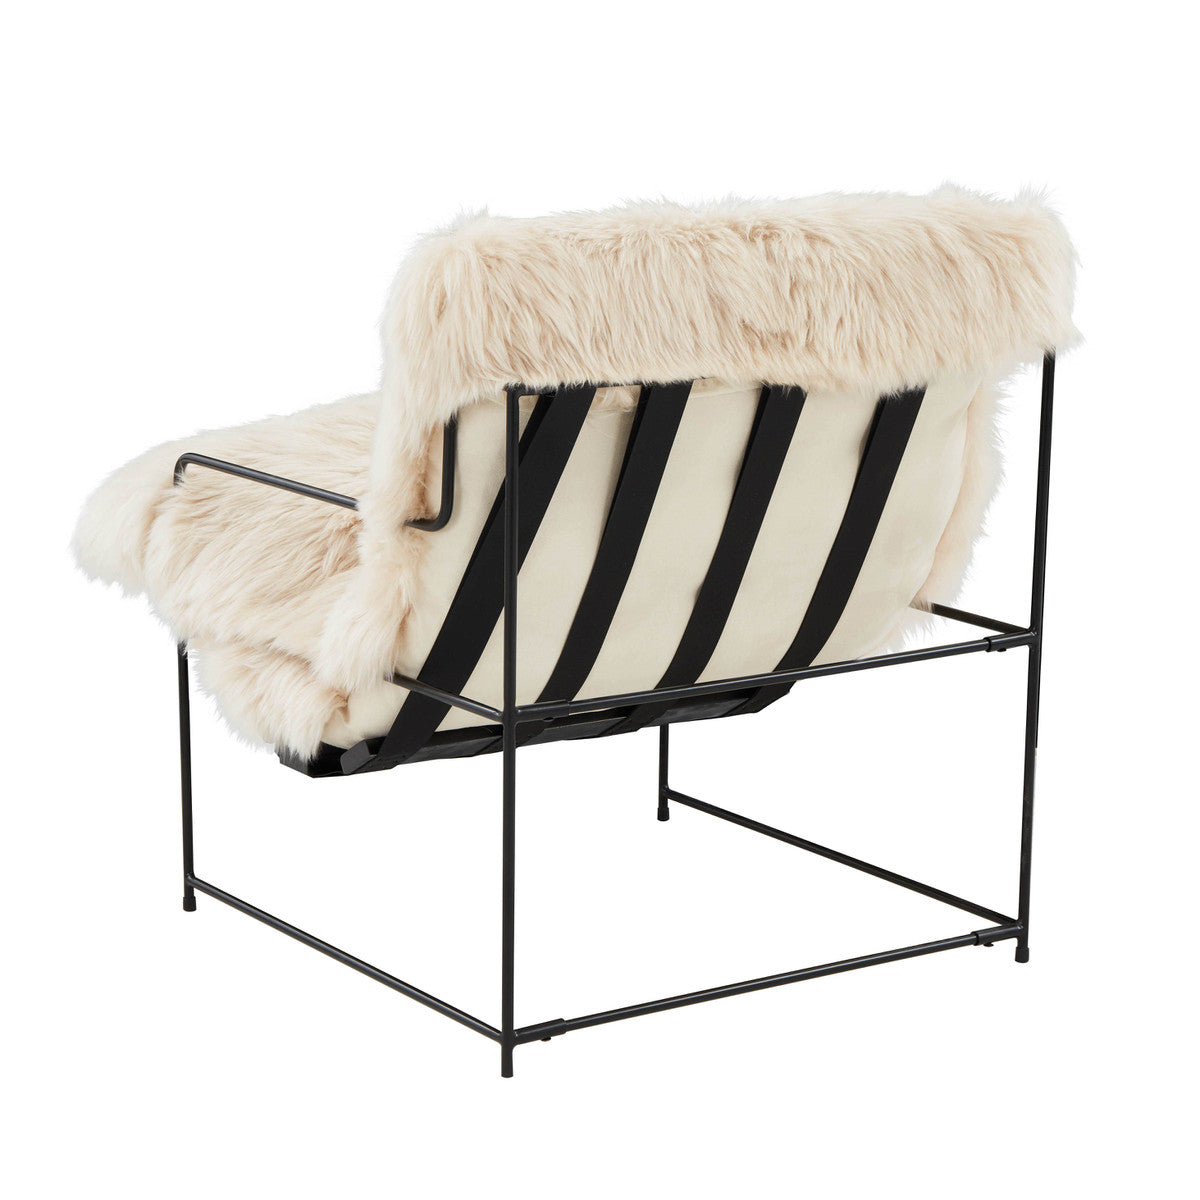 Kim Natural Genuine Sheepskin Chair - Luxury Living Collection